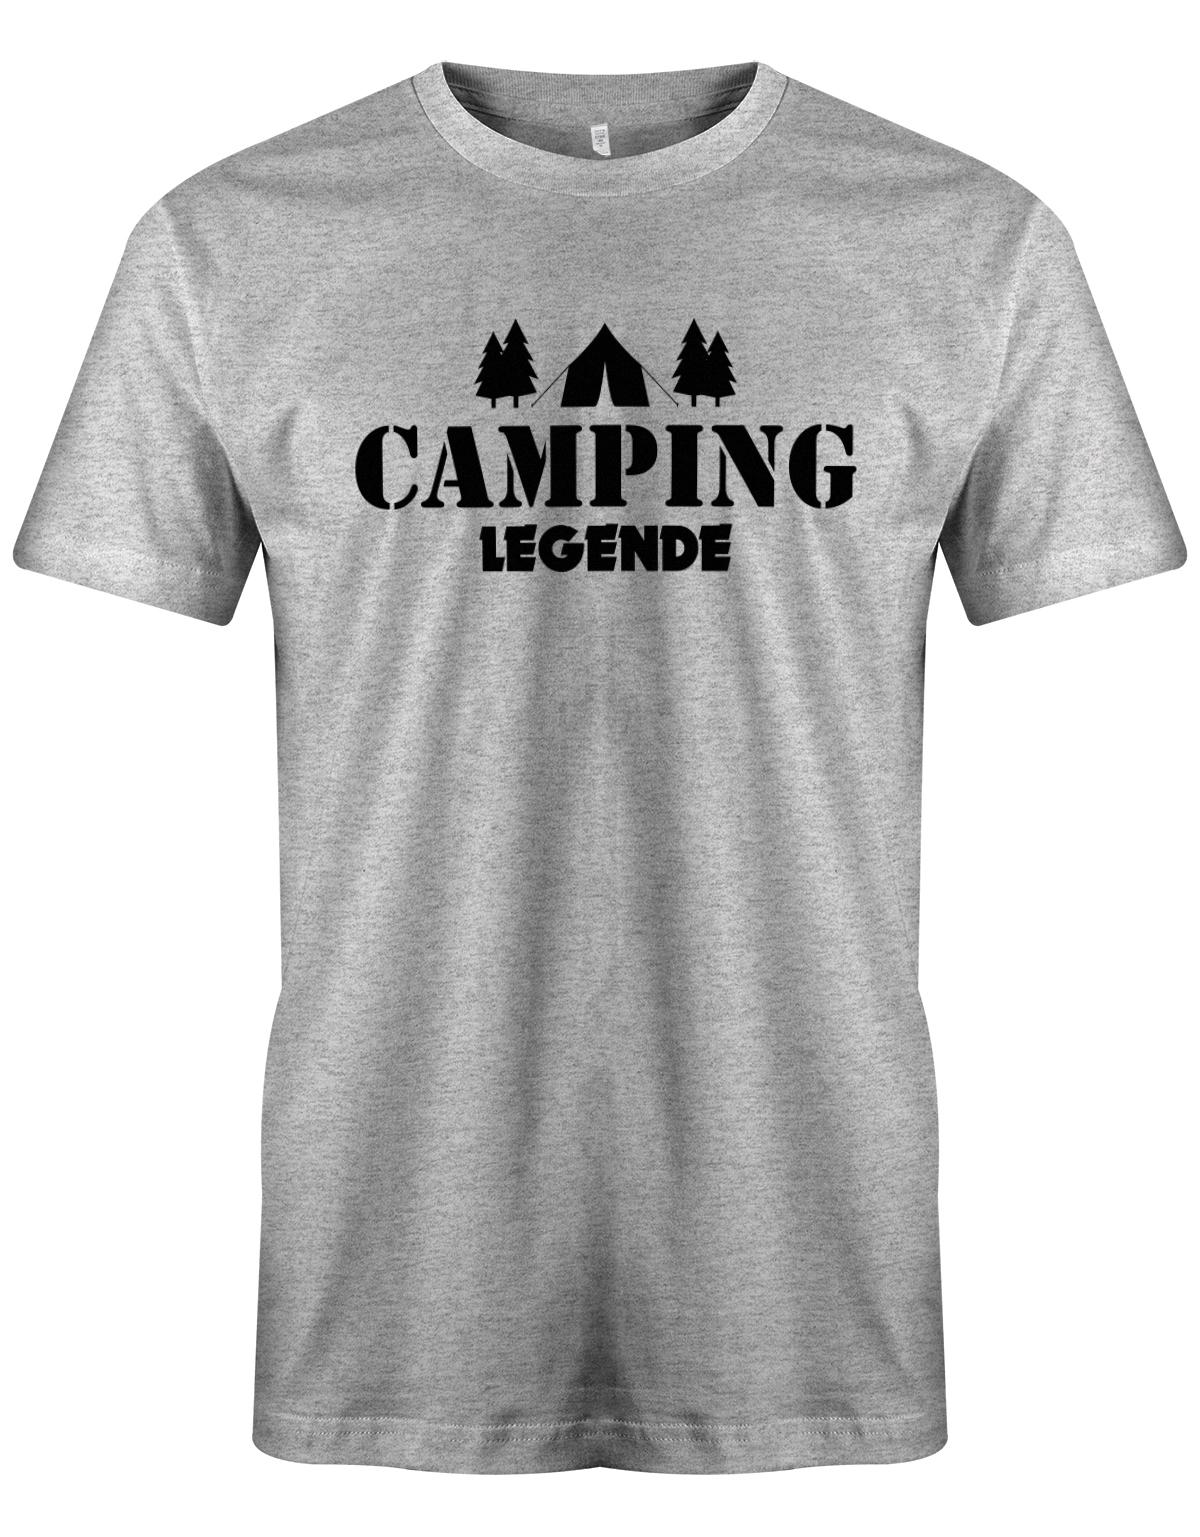 Camping-Legende-Herren-Shirt-grau